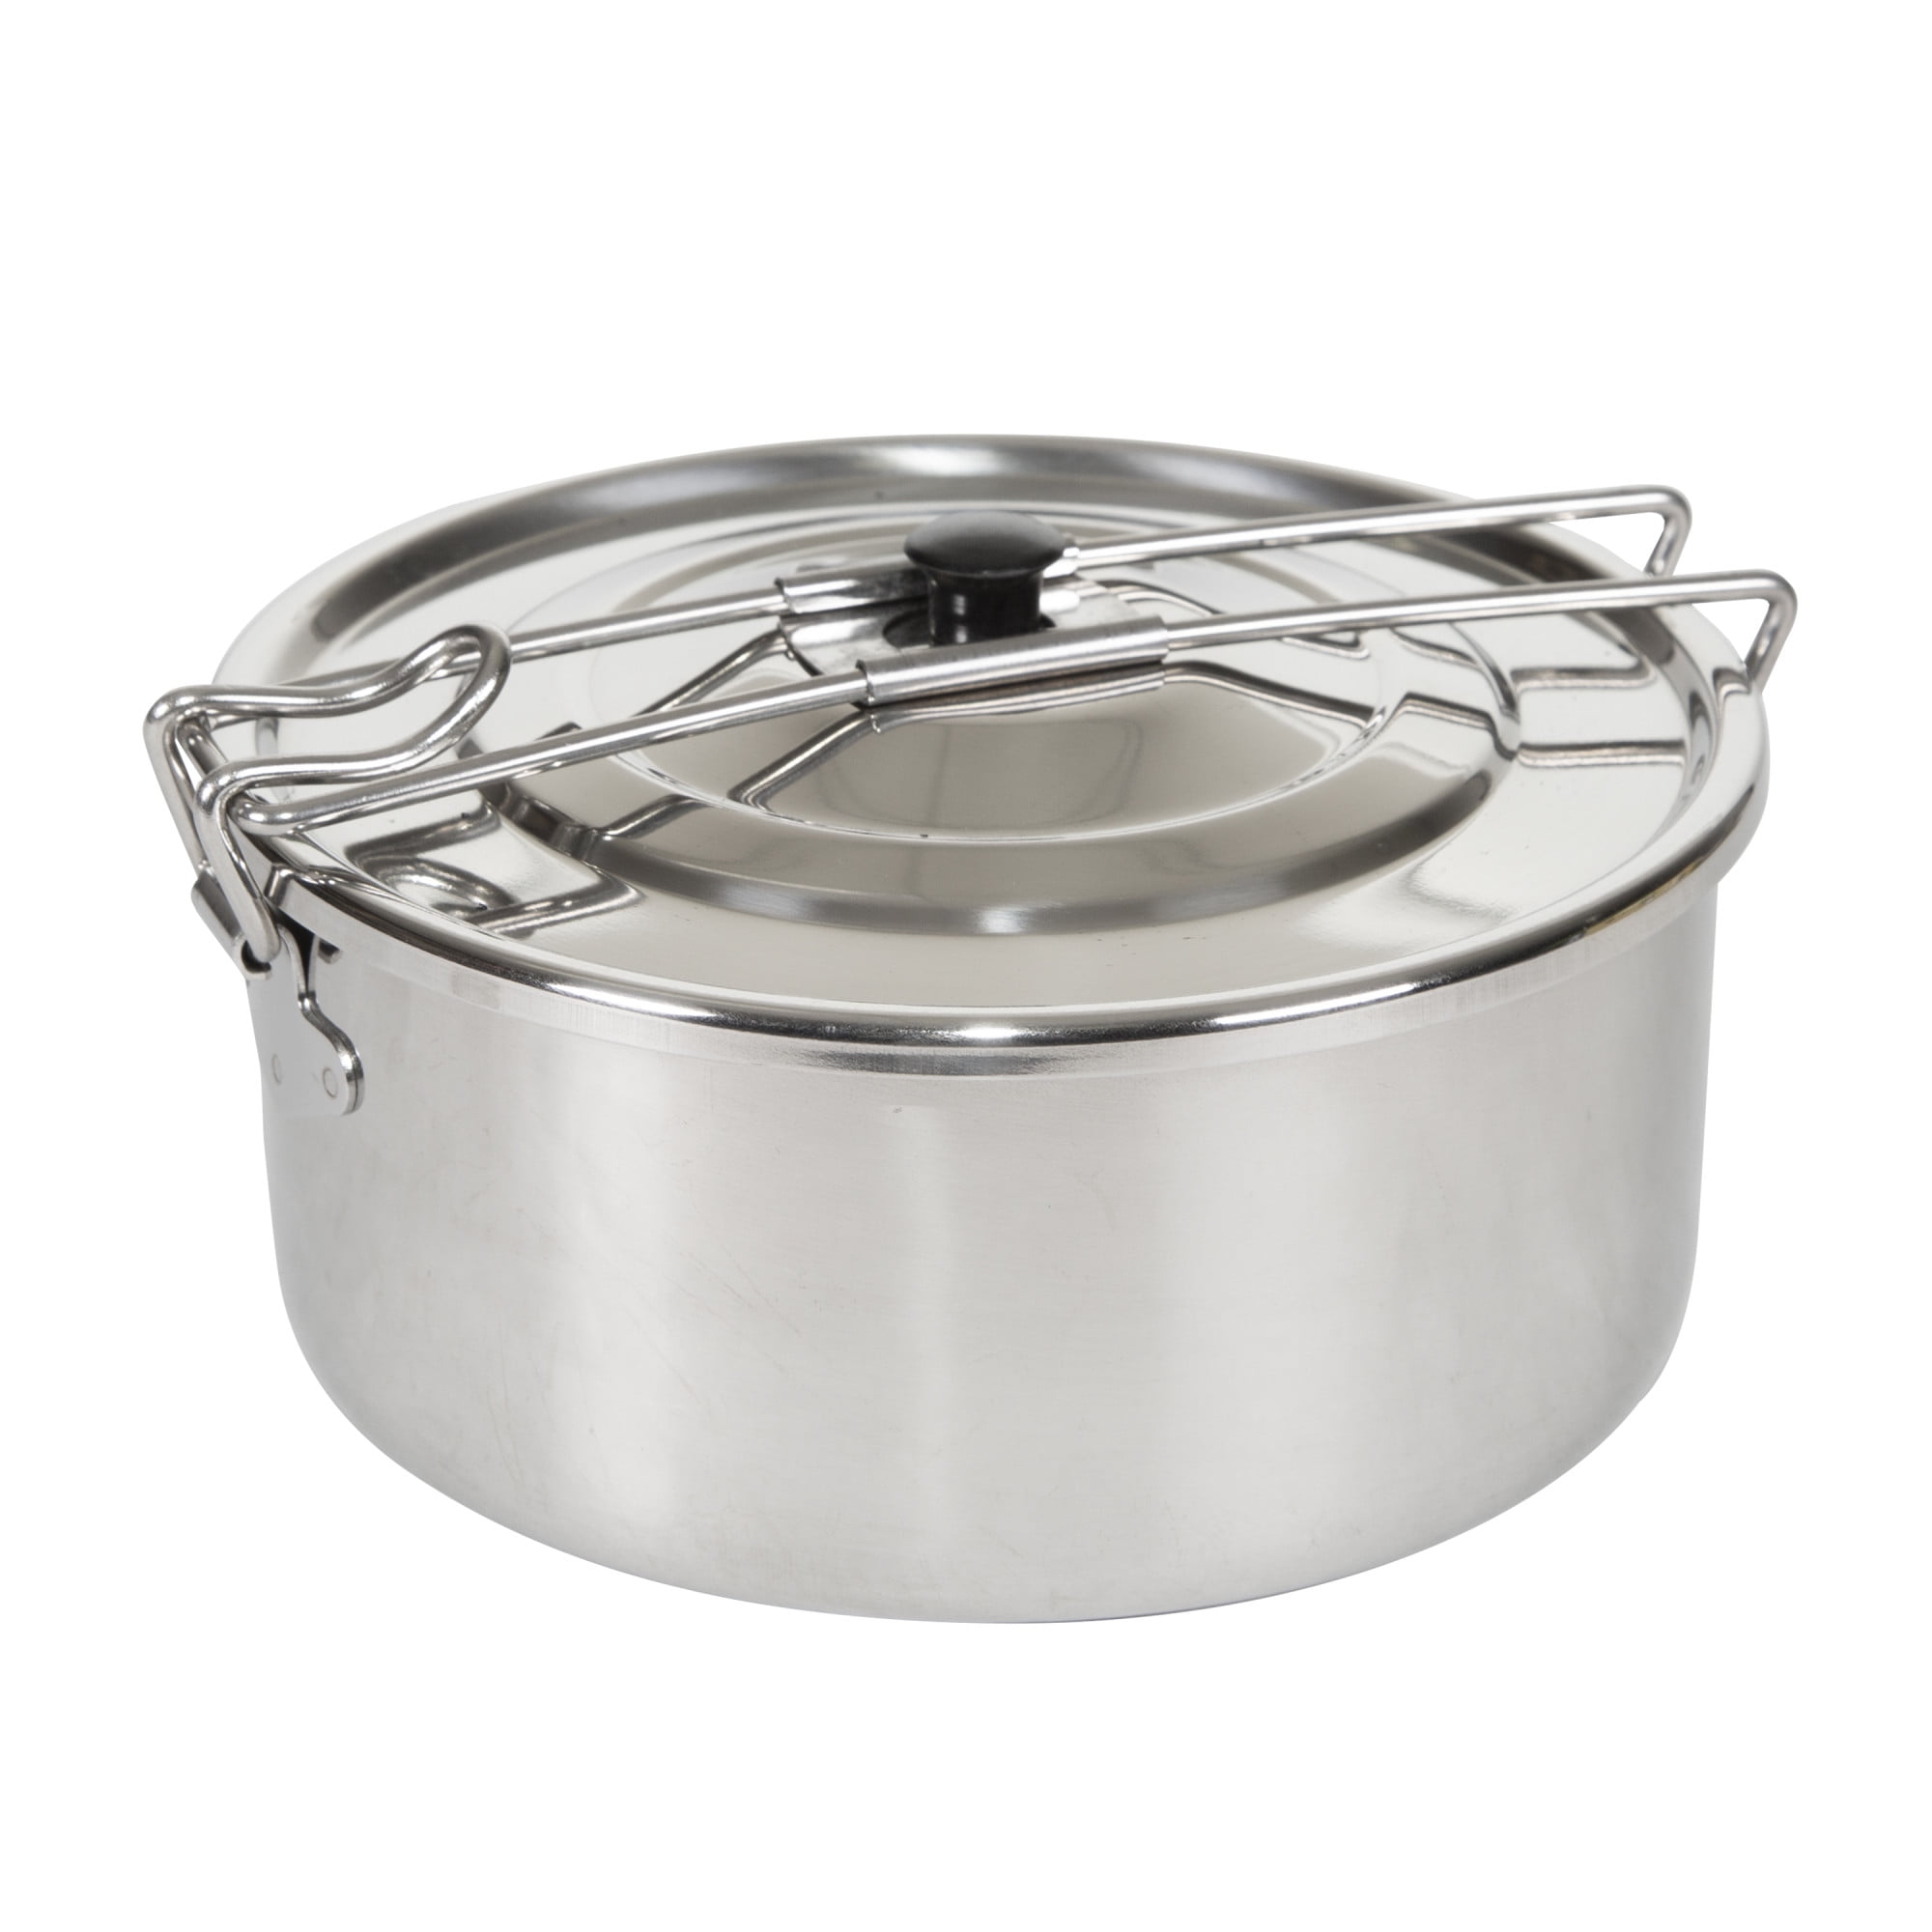 6x Steamer & Cookware Set Stainless Steel Sauce Pan Pot KITCHEN Cook UK FREE P&P 